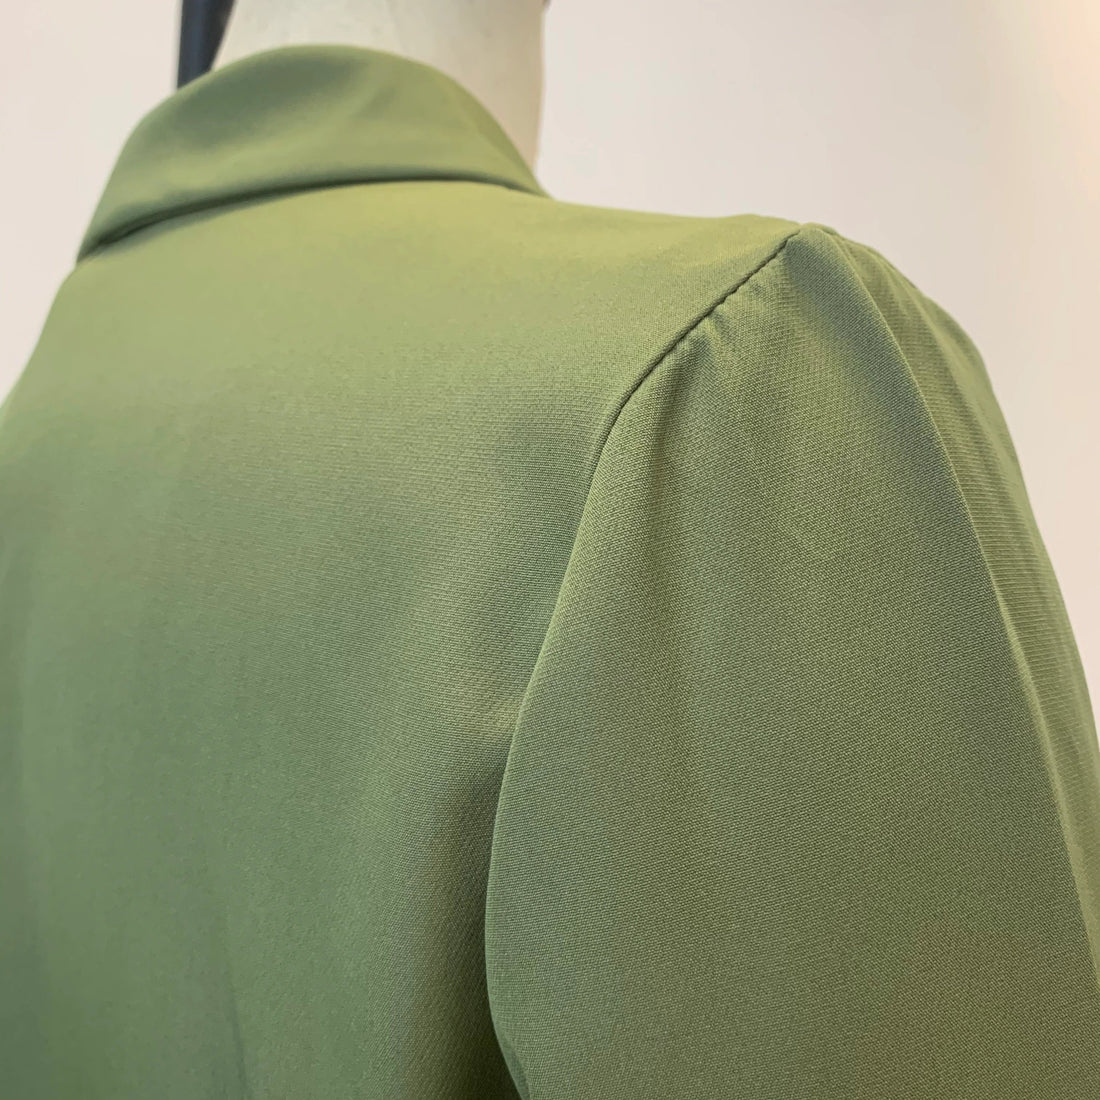 Women's Green V-Neck A-Line Pleated Midi Dress